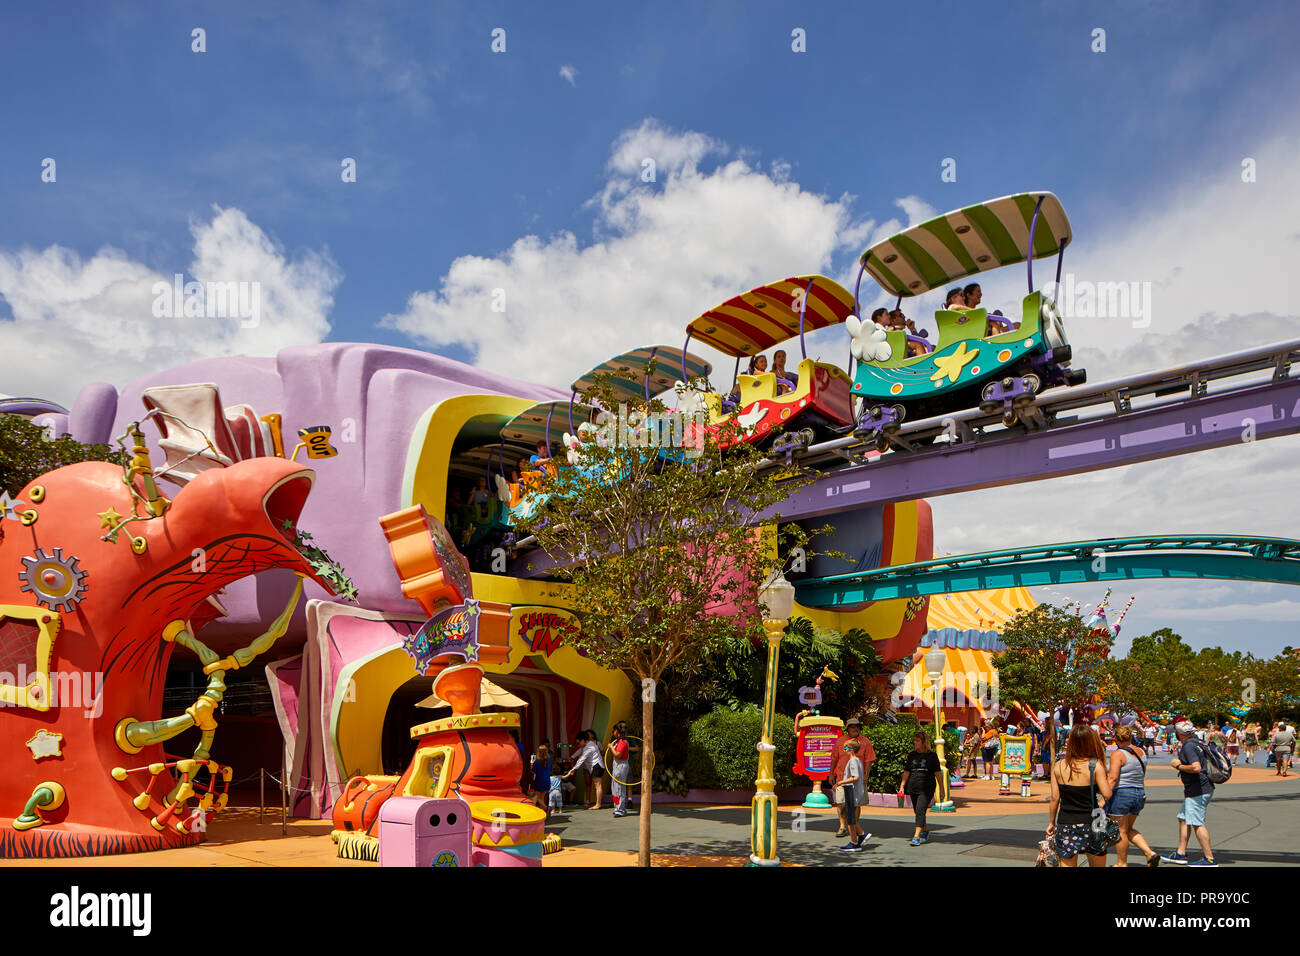 Rollercoaster in Seuss Landing Dr Seuss land in Universal studios orlando Stock Photo